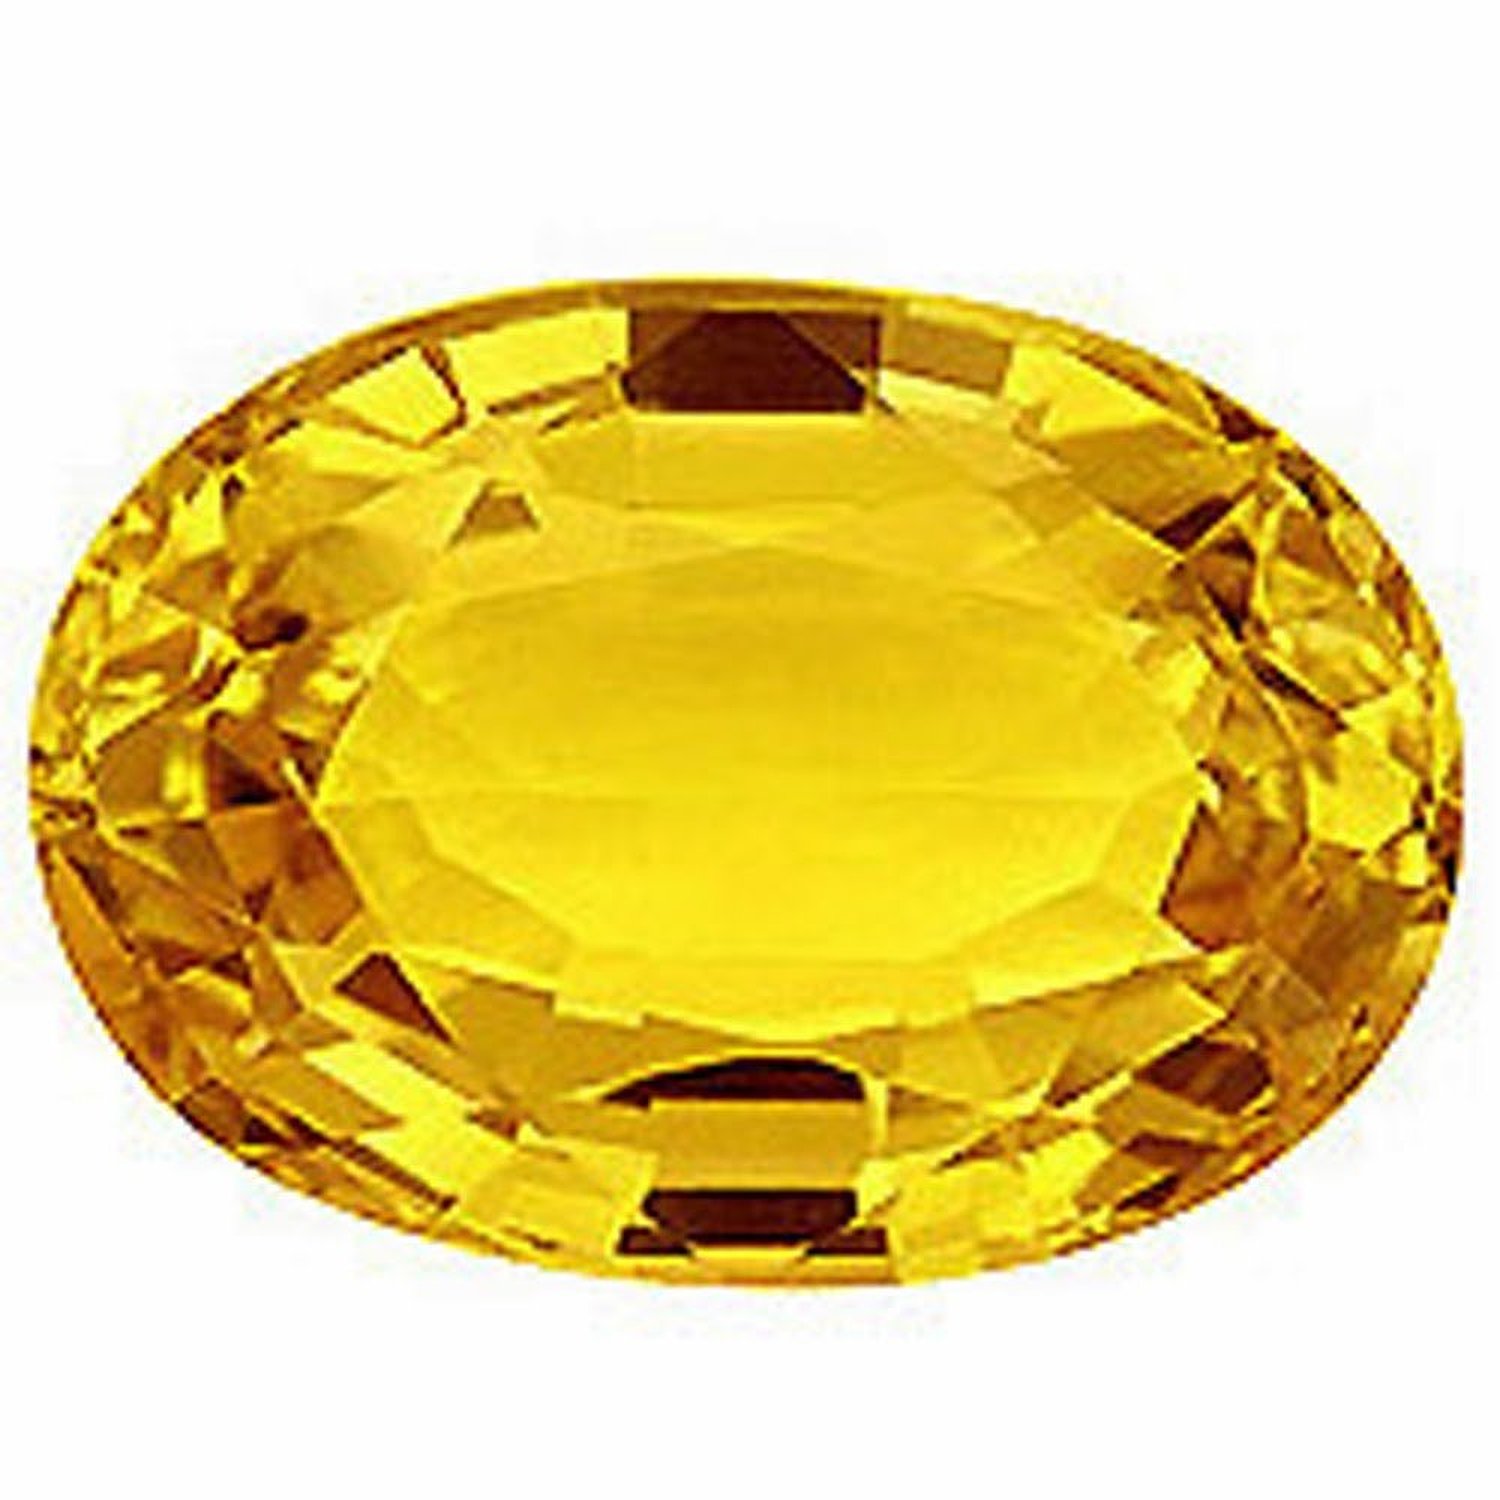 топаз желтый камень фото